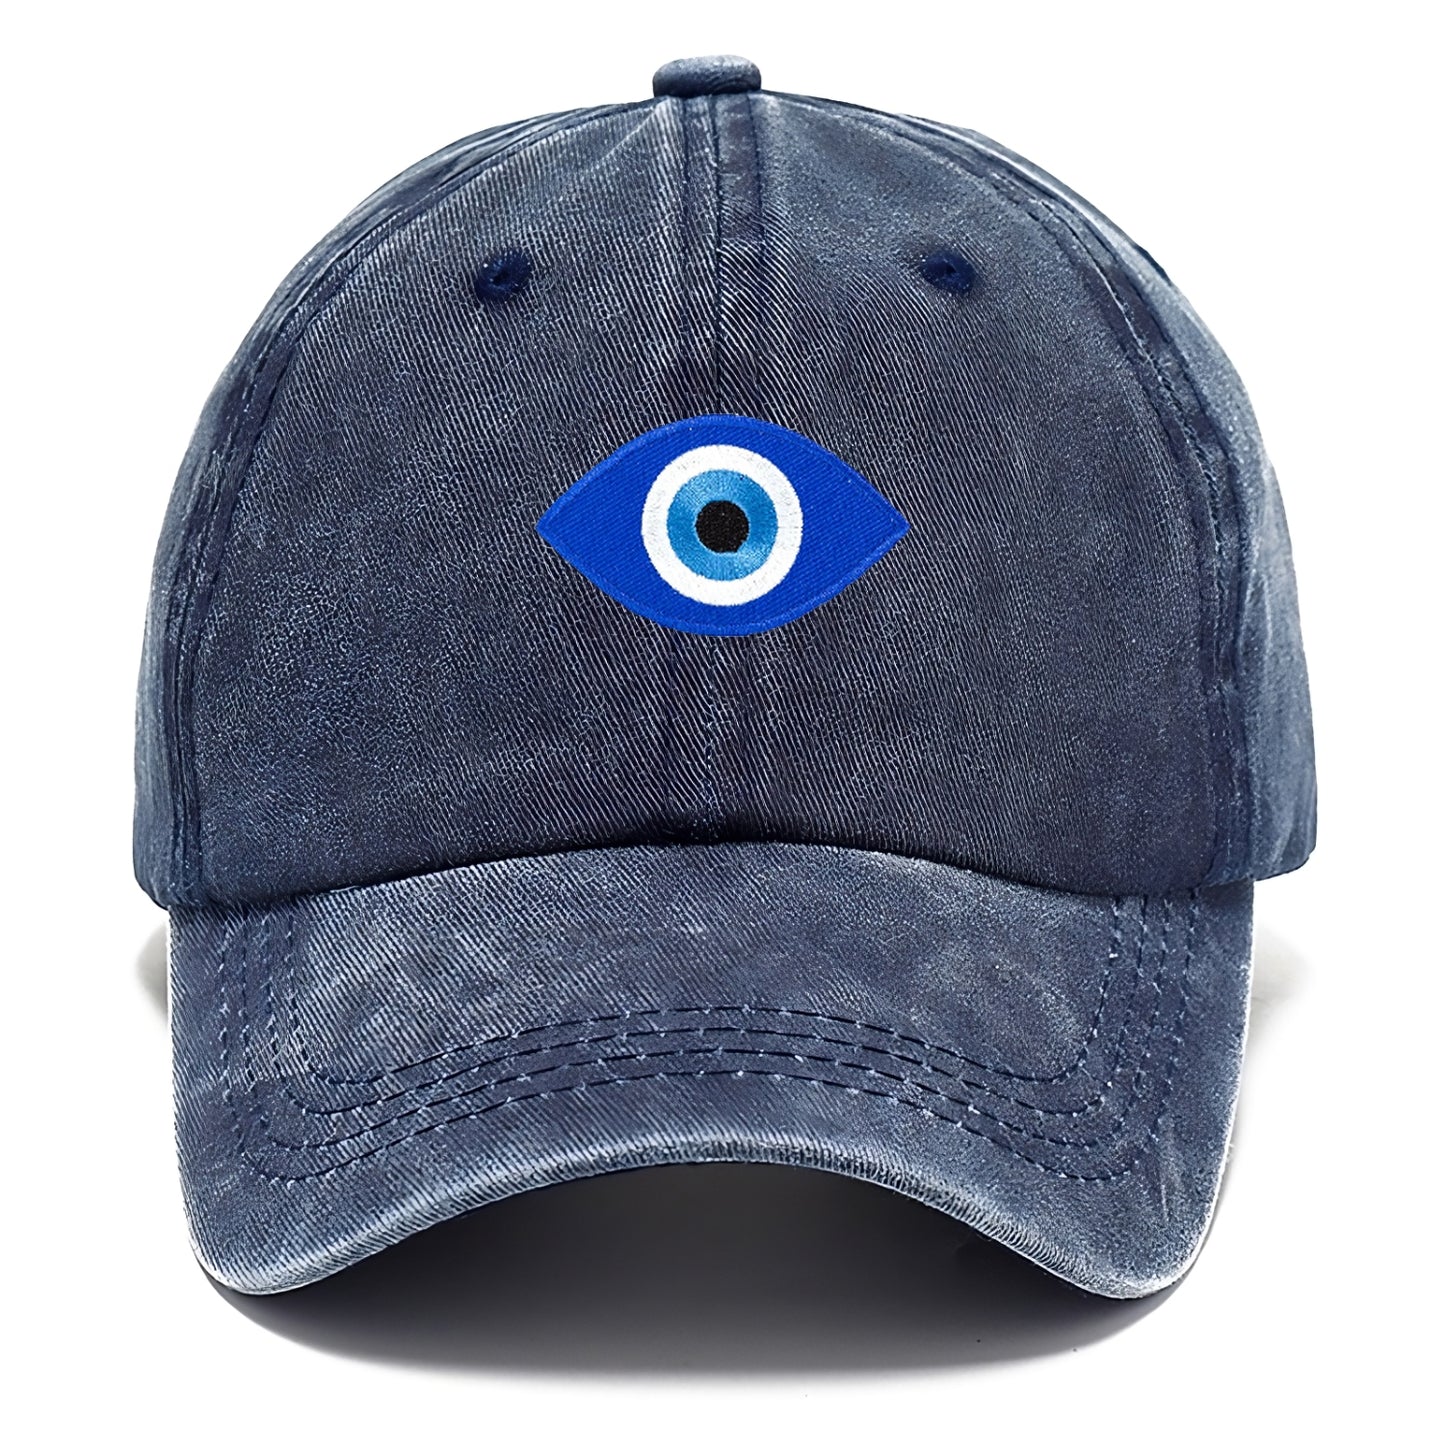 eye Hat